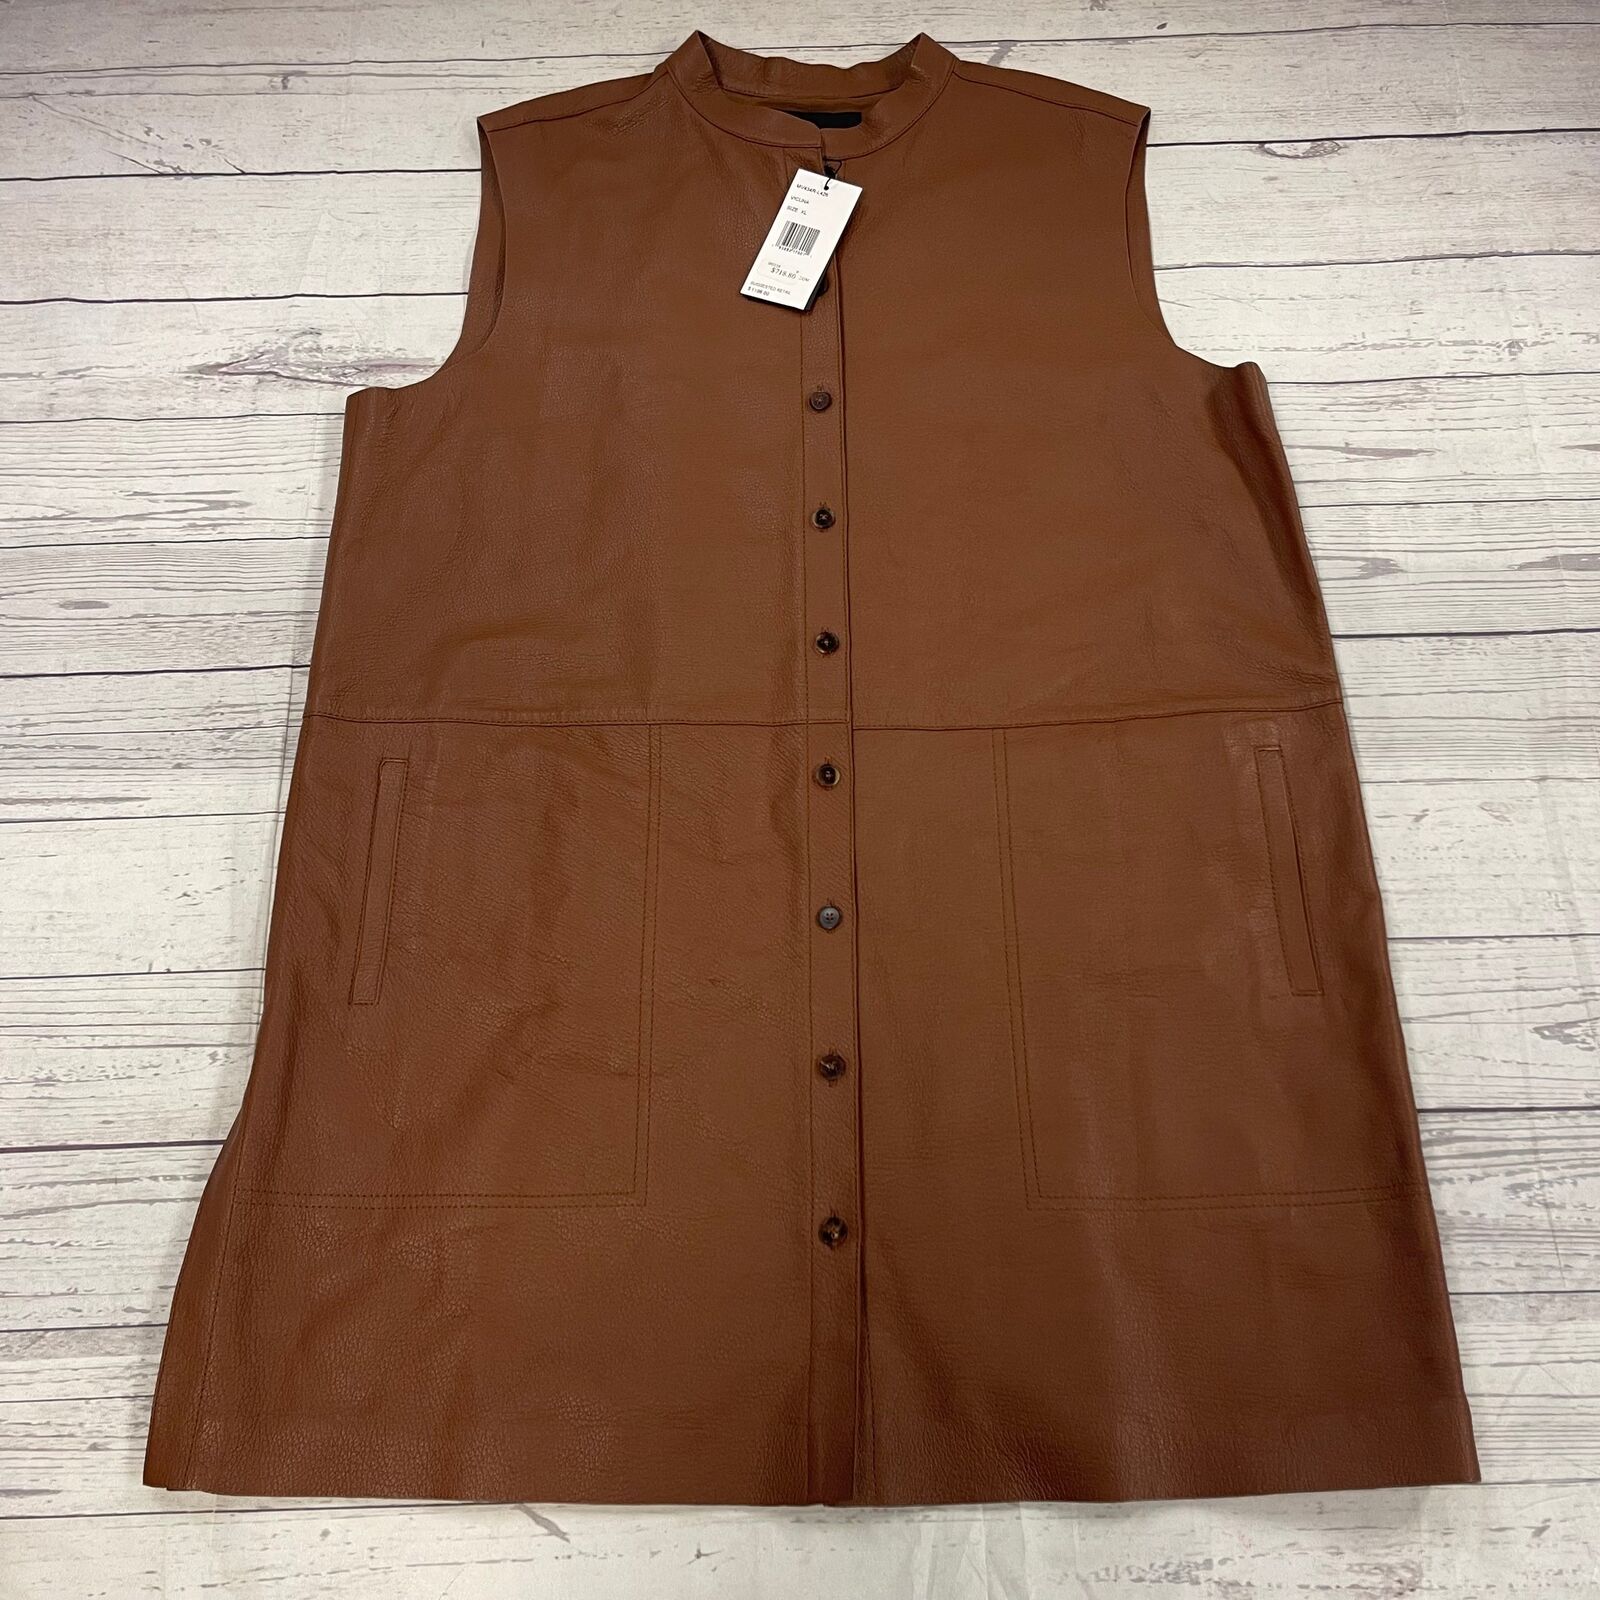 Lafayette 148 Malva Brown Leather Lamb Skin Vest Women’s Size XL New